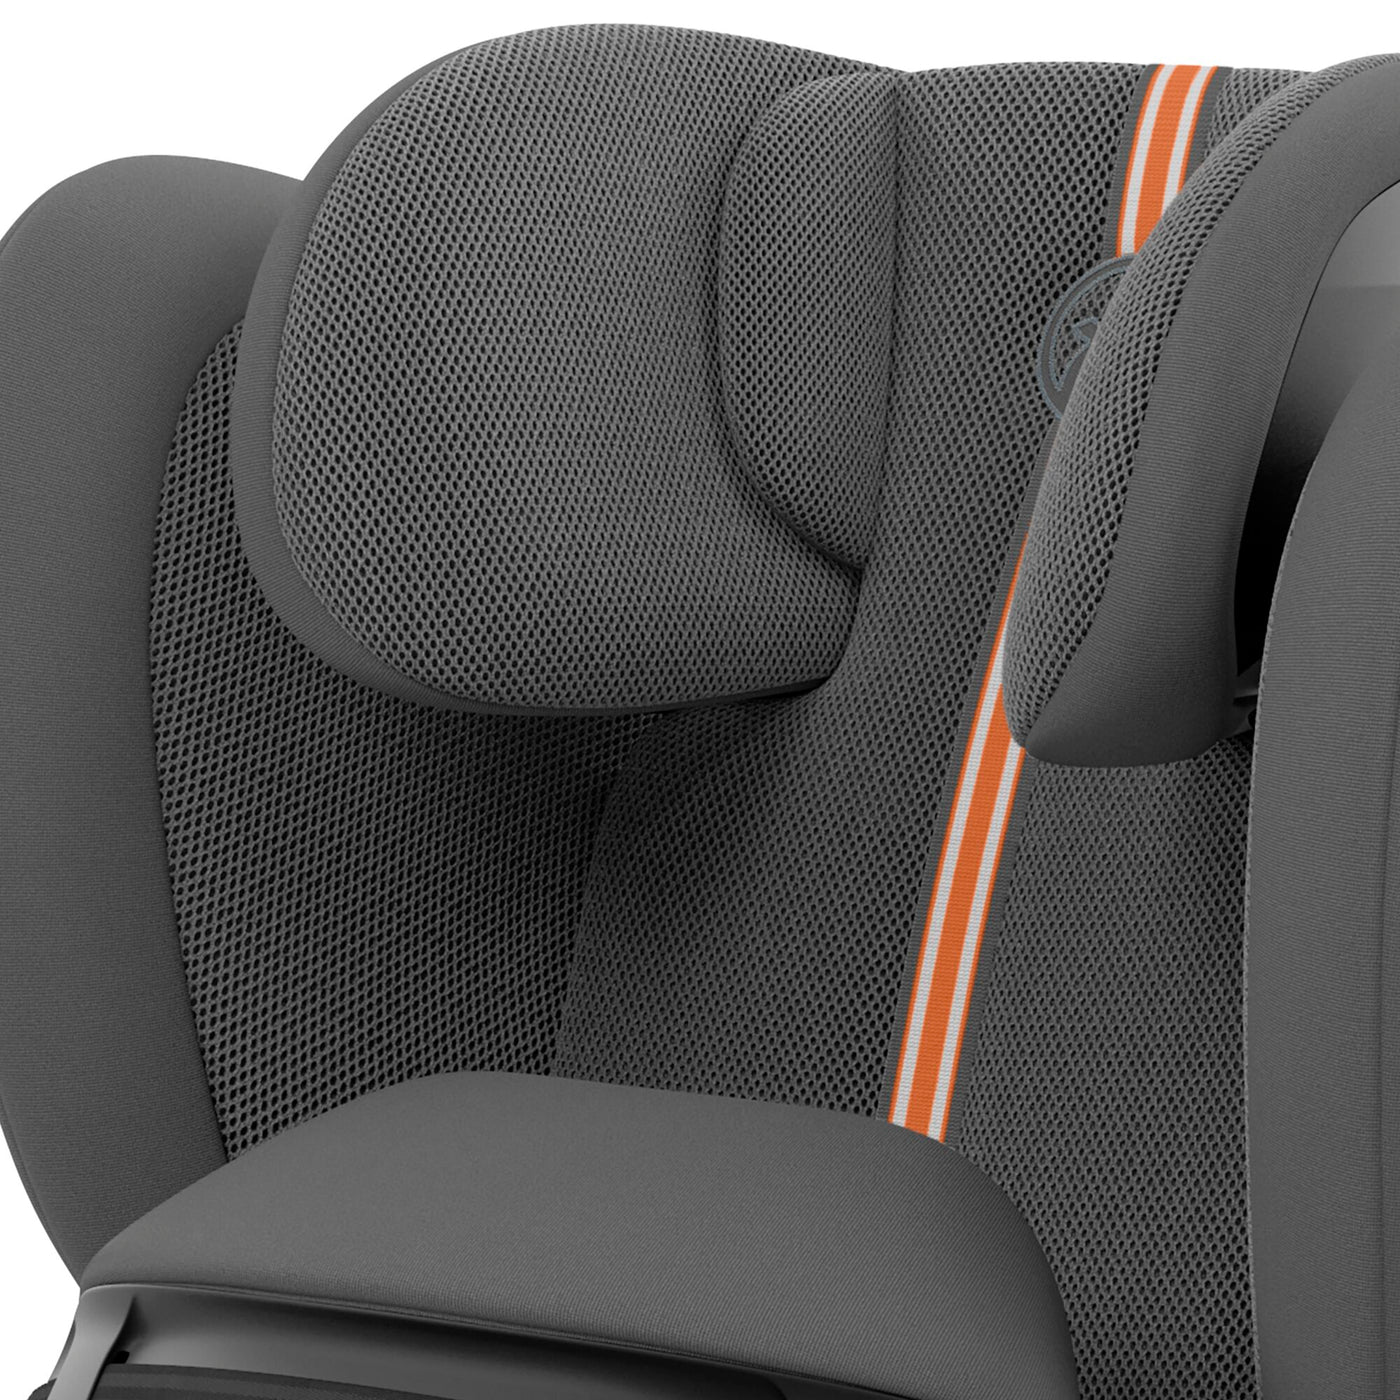 Cybex Pallas G i-Size Car Seat PLUS - Lava Grey